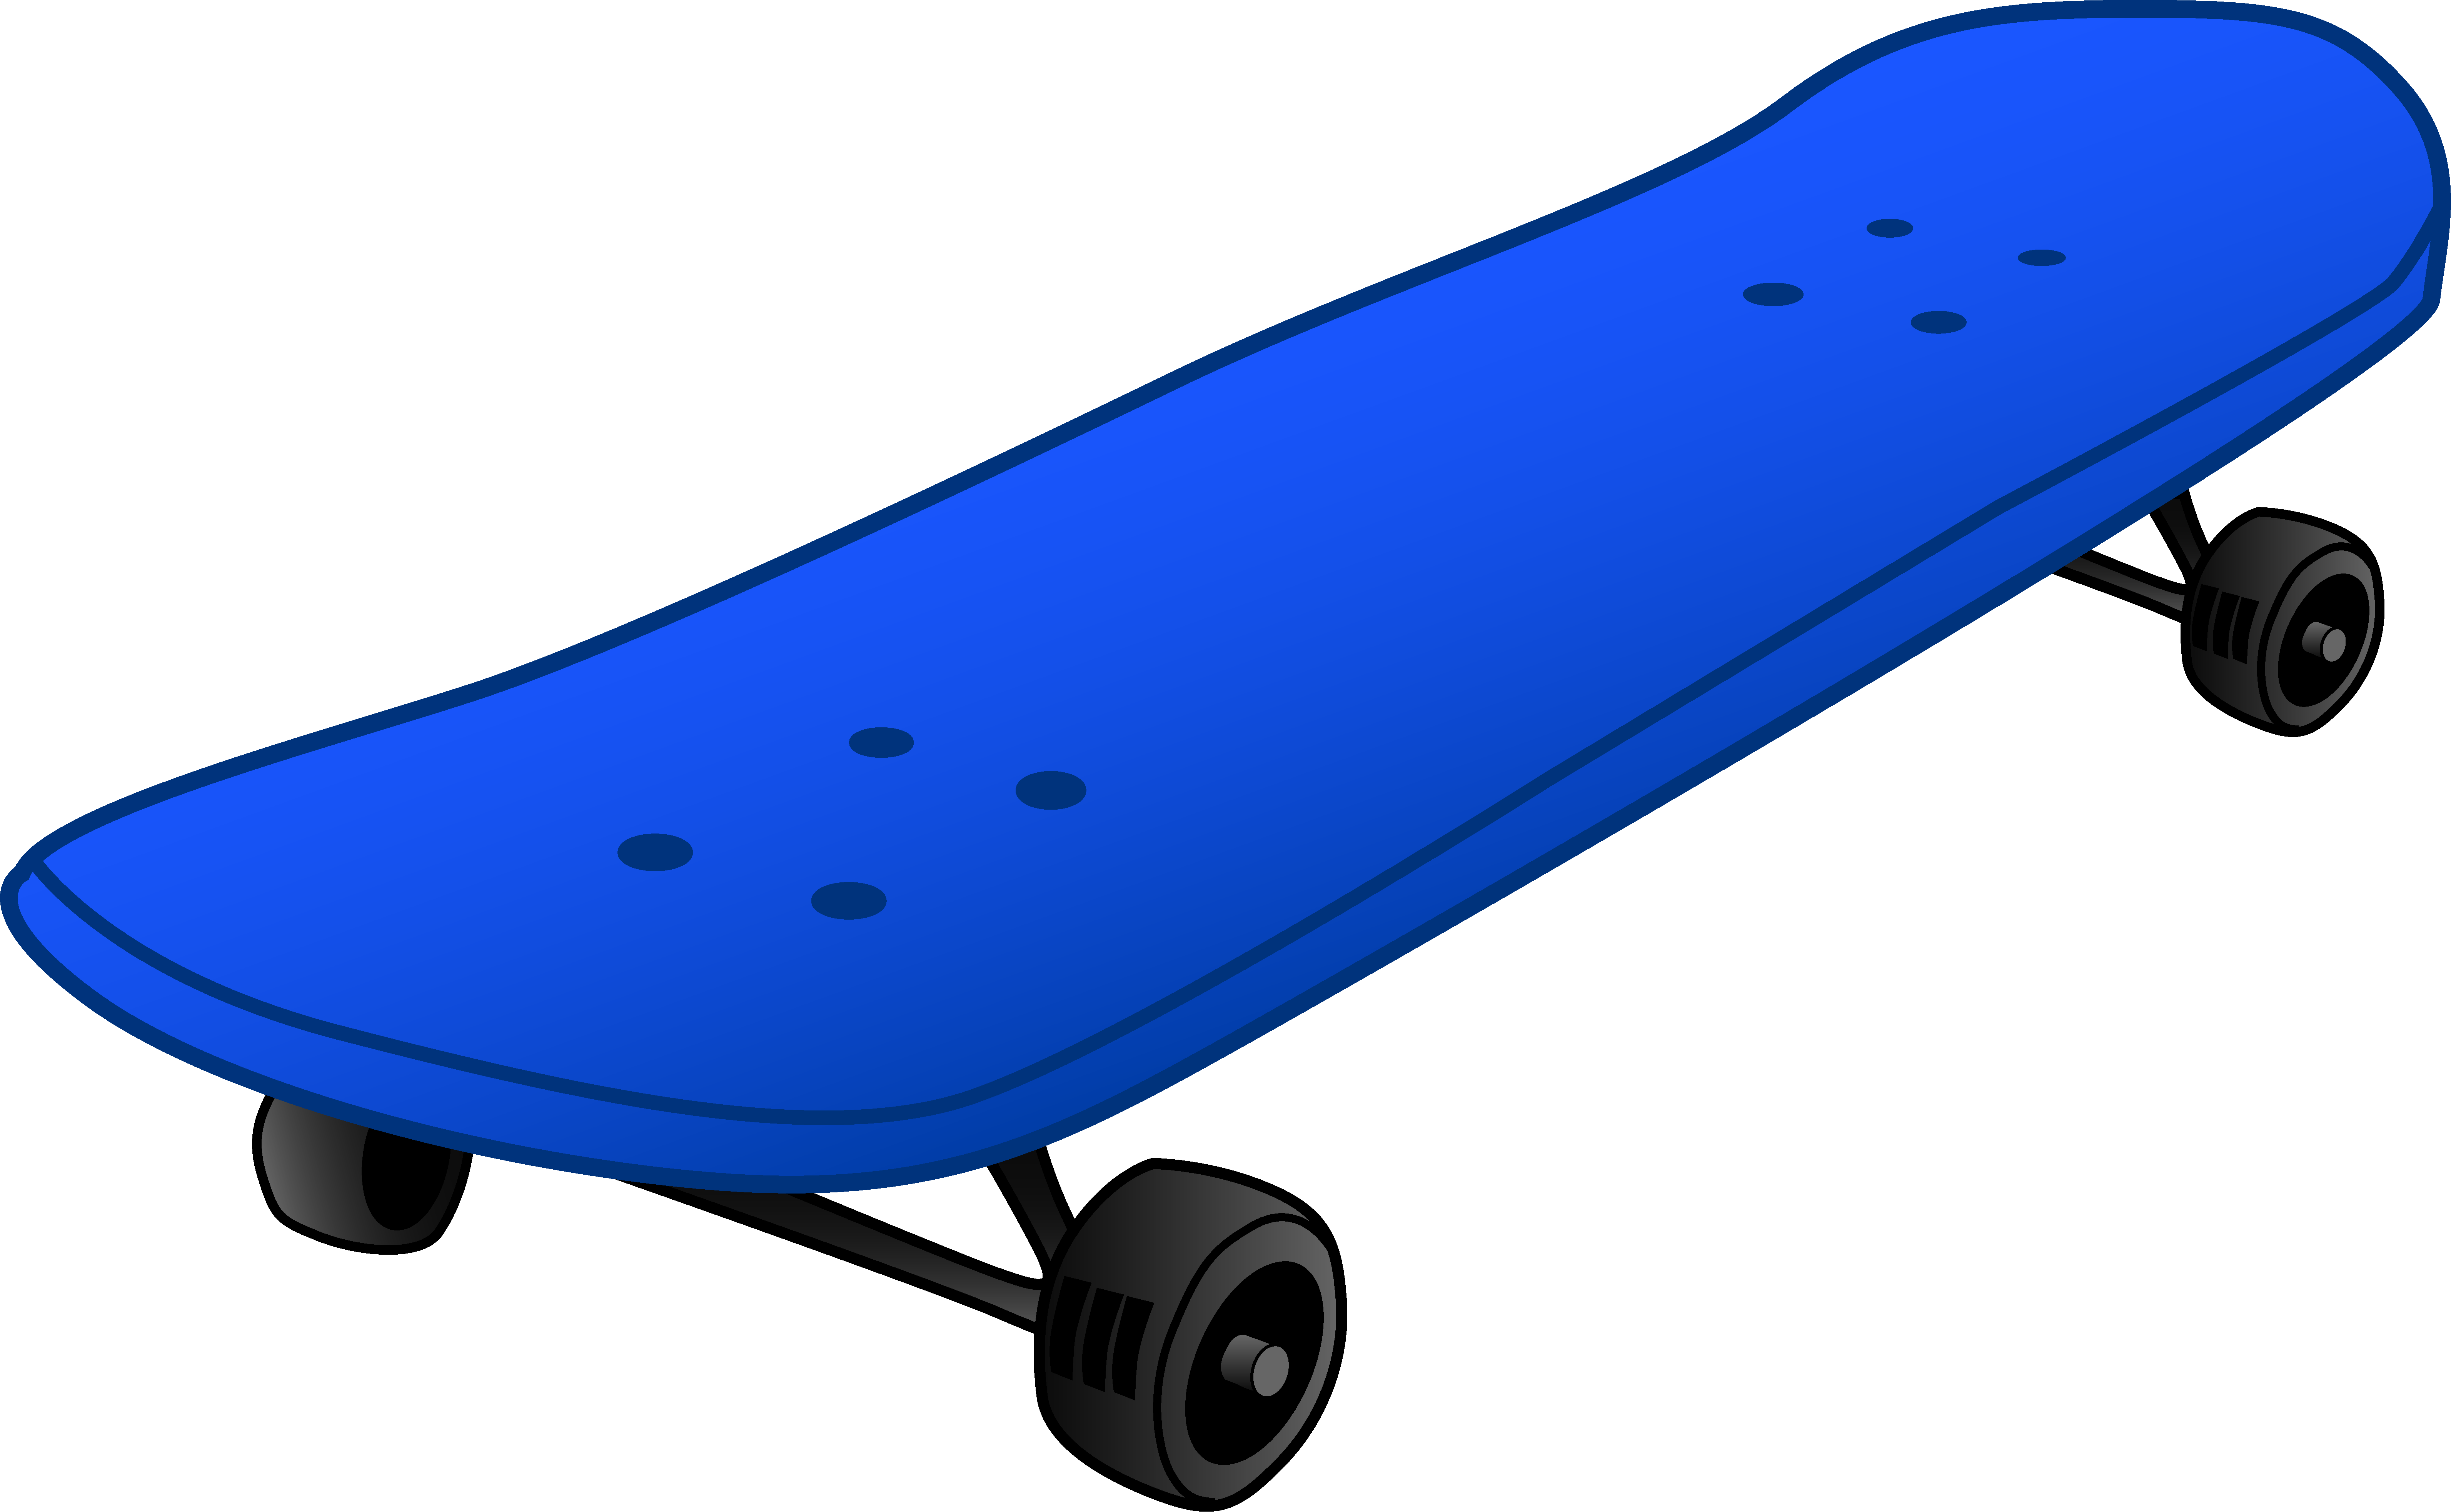 Skateboard clipart 2